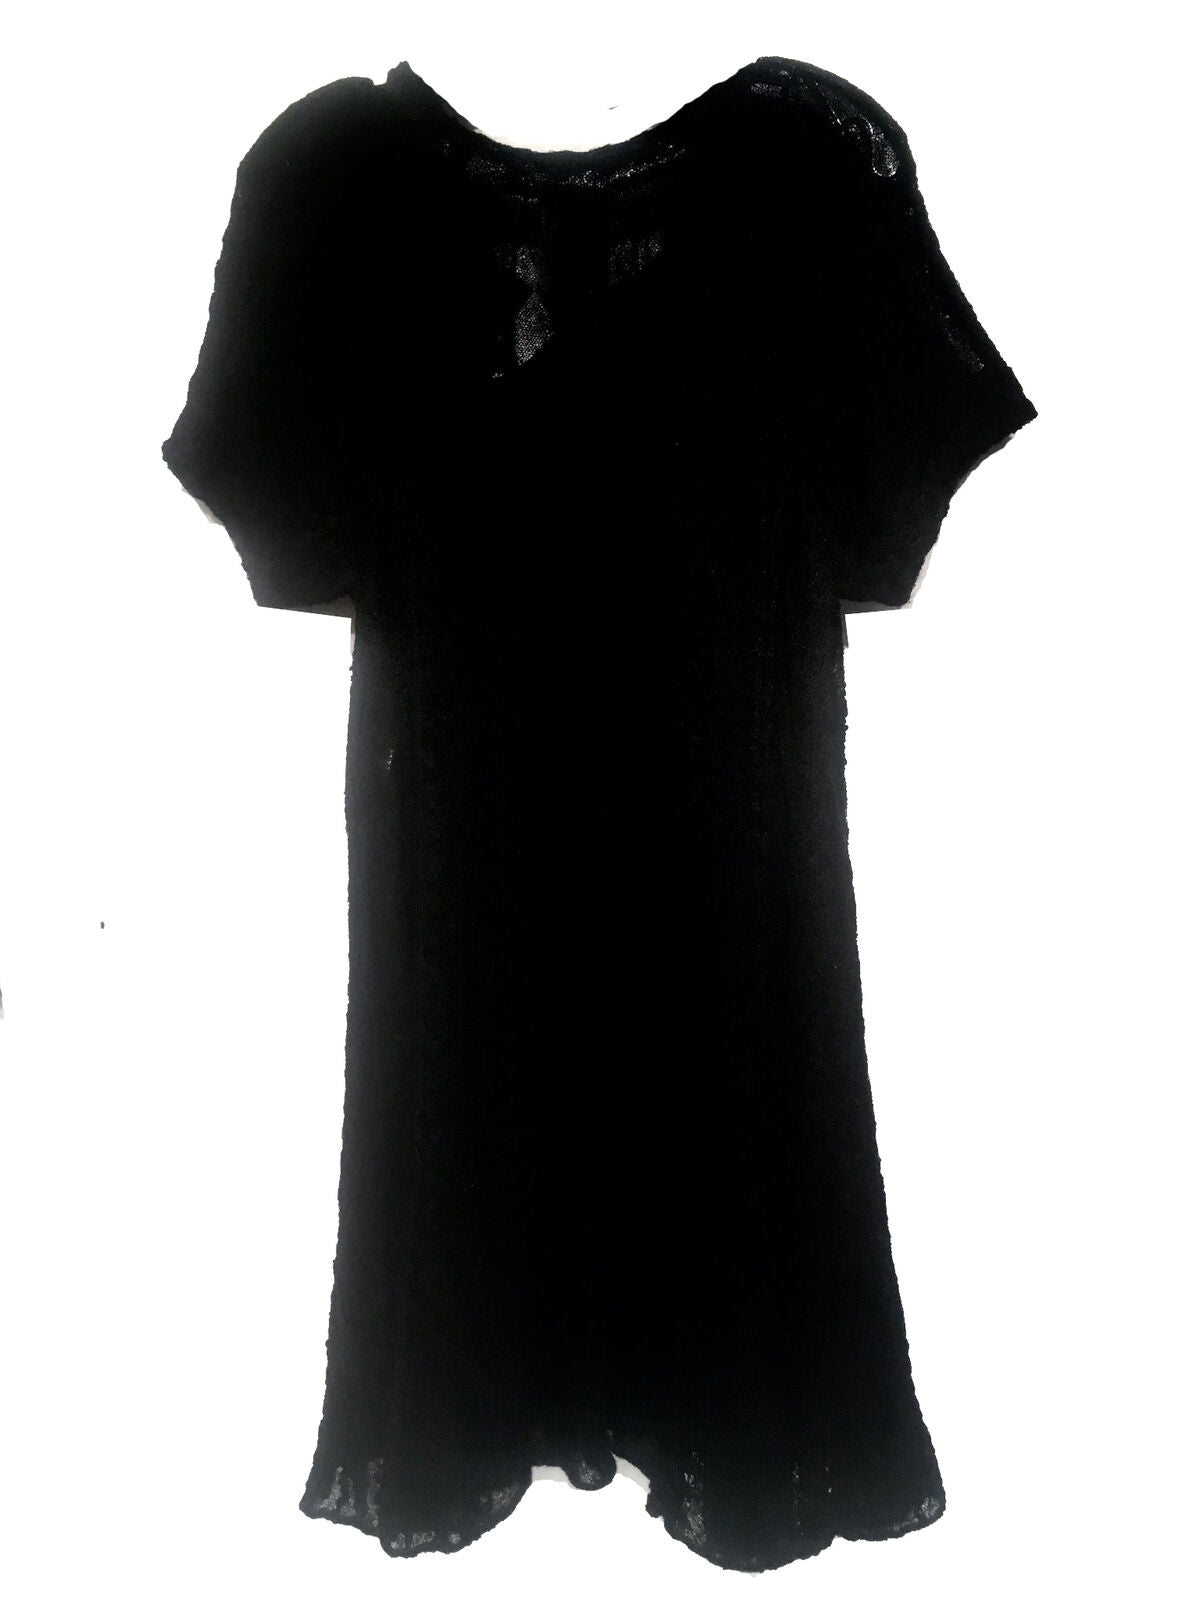 CHANEL Size 42 Black Alpaca Knit Dress